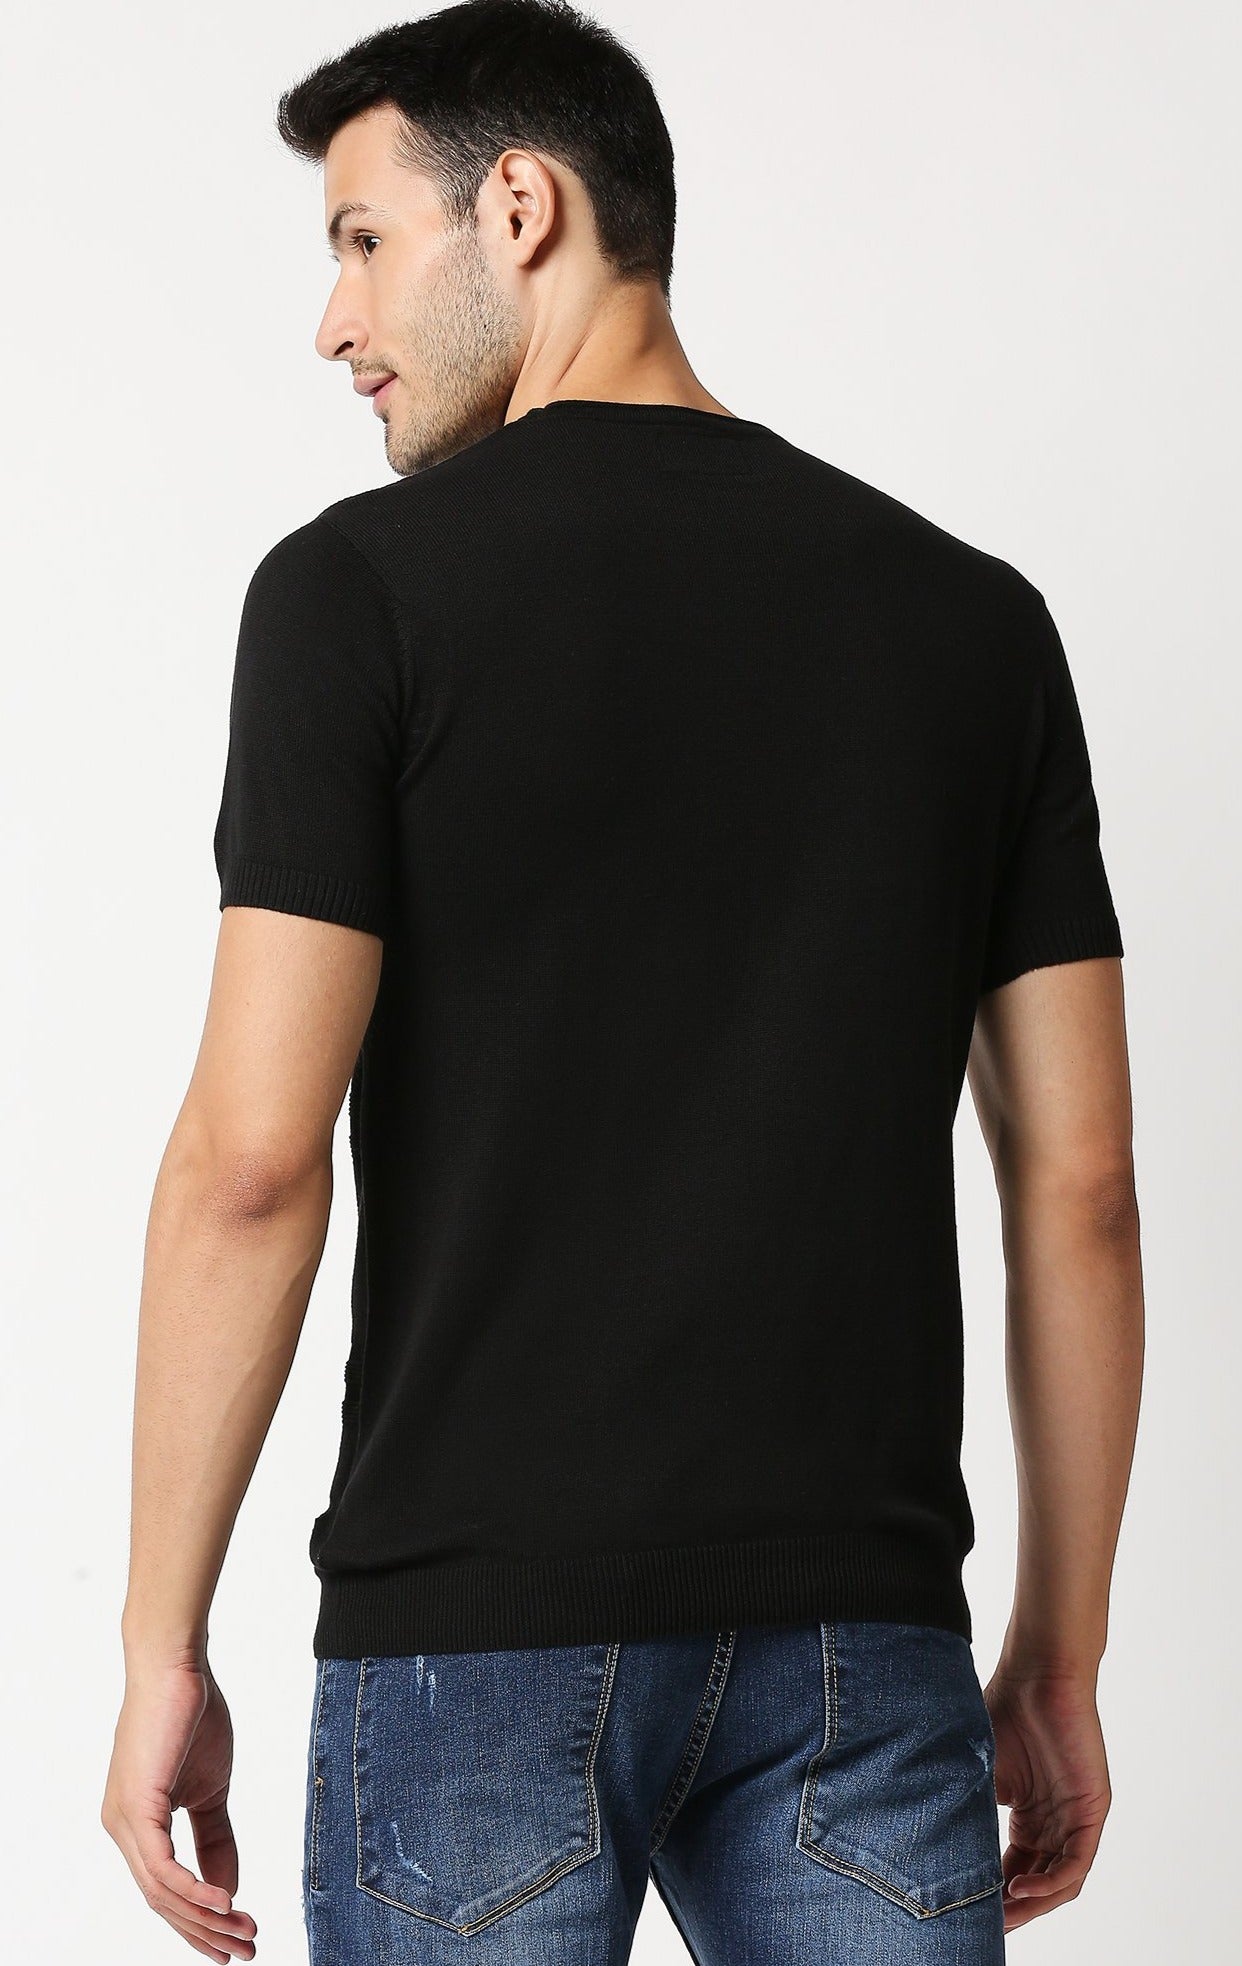 Fostino Escape Black Round Neck T-Shirt - Fostino - T-Shirts